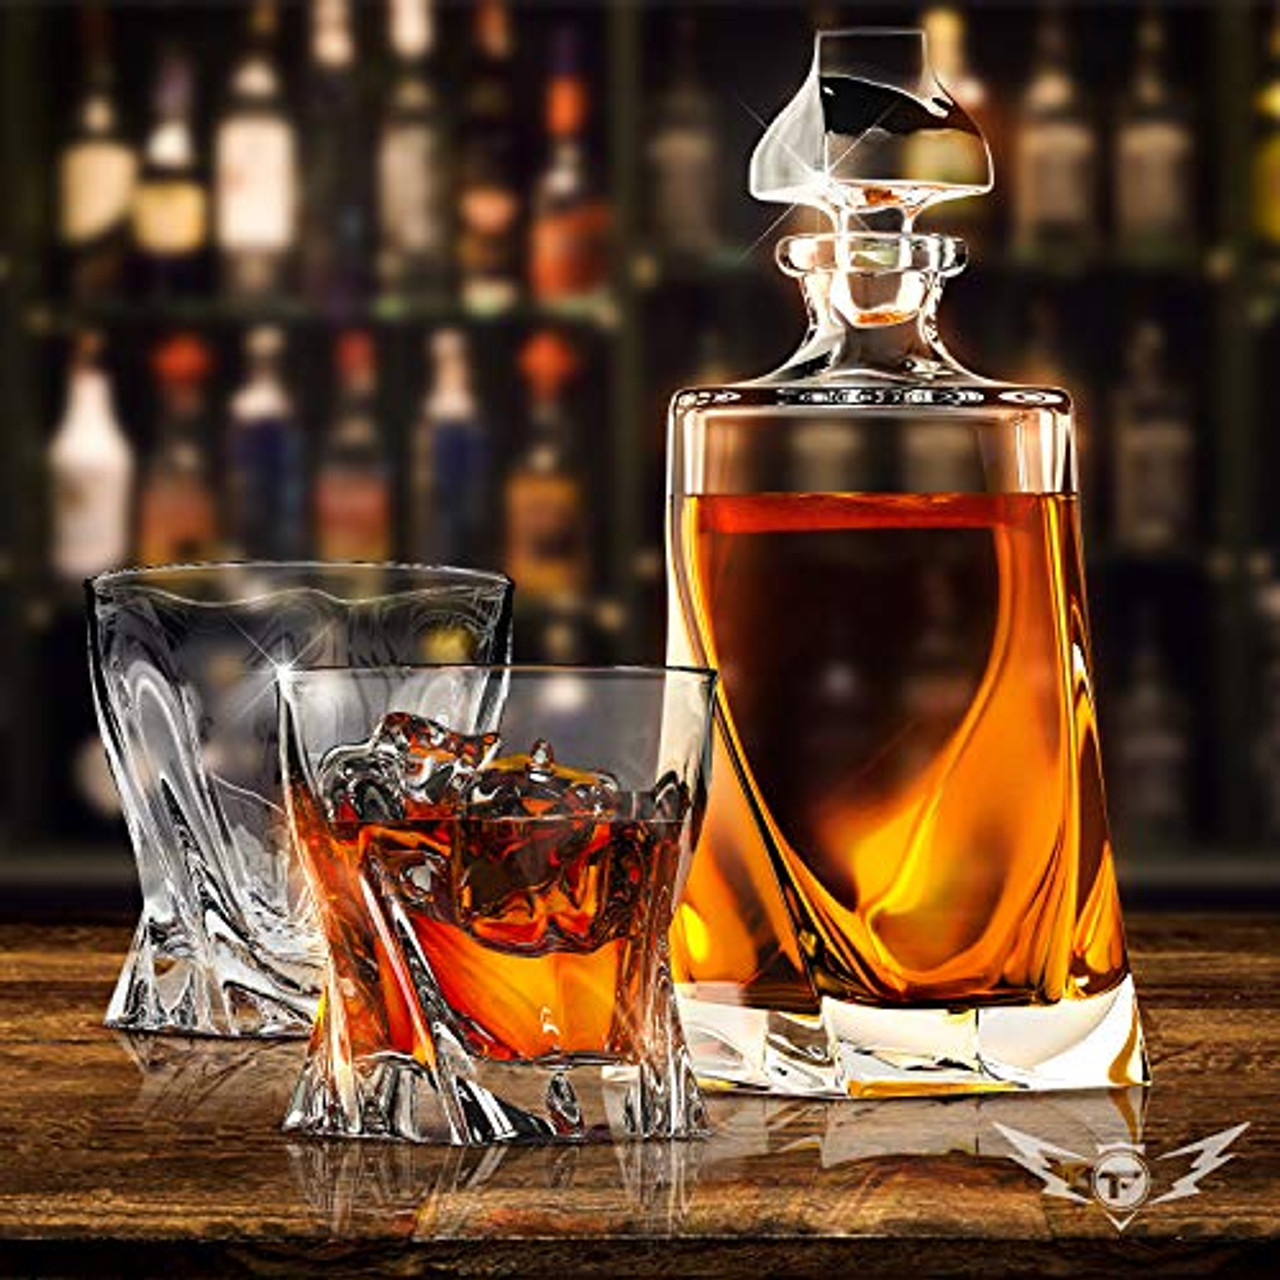 Twist Scotch Glasses Set - Lucifer Whiskey Glasses - Home Bar Gift